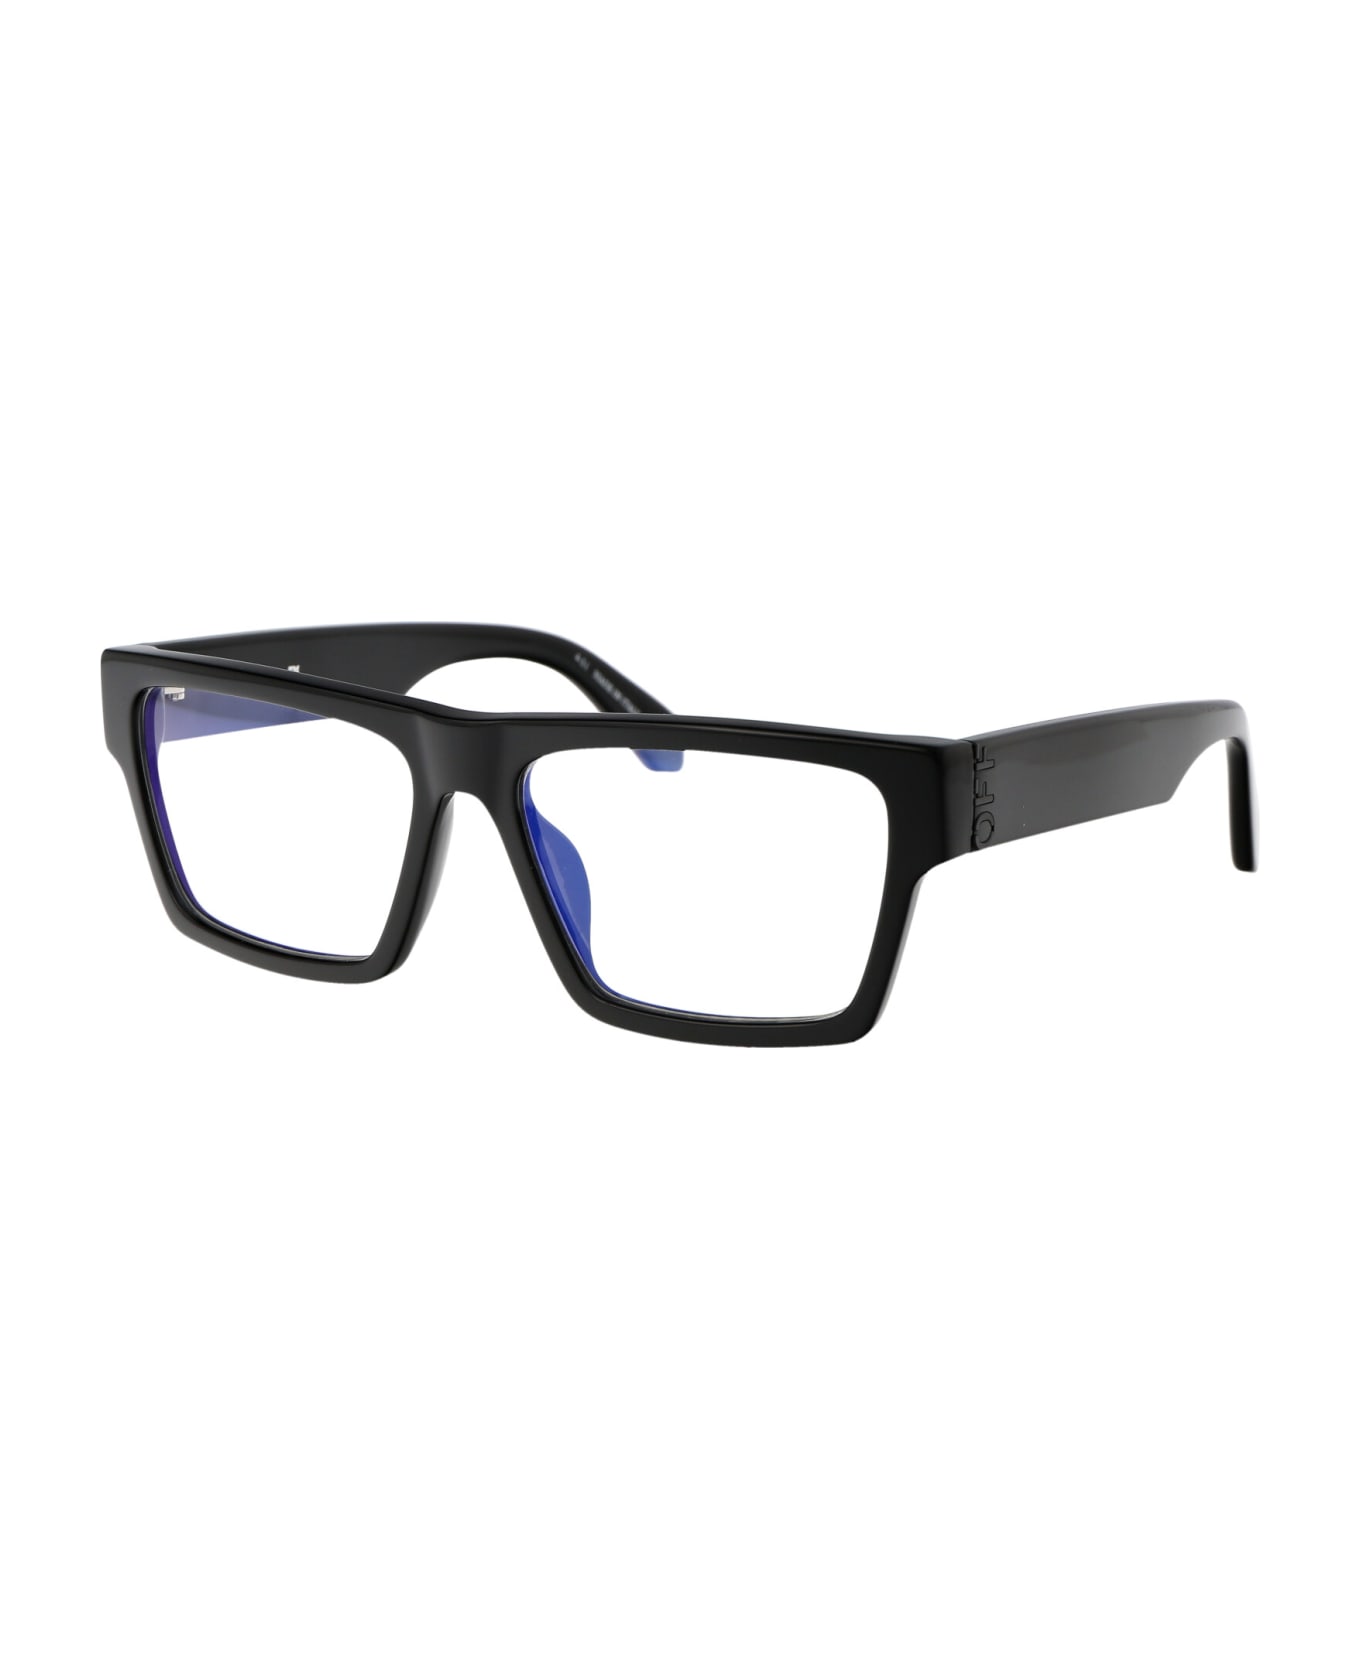 Off-White Optical Style 46 Glasses - 1000 BLACK